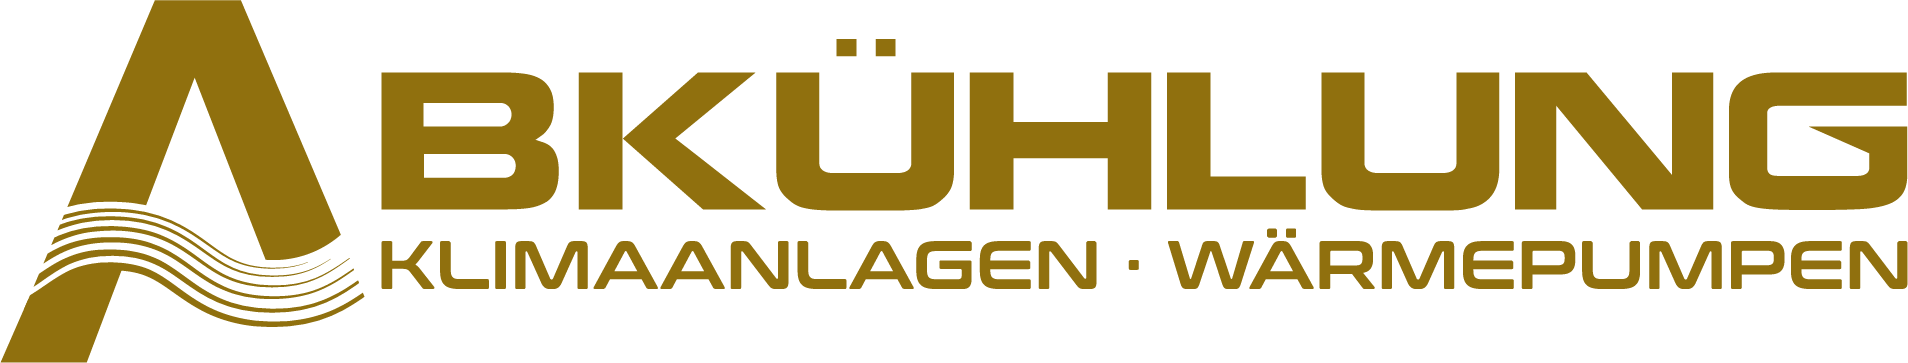 Abkühlung Logo Schriftzug in Gold